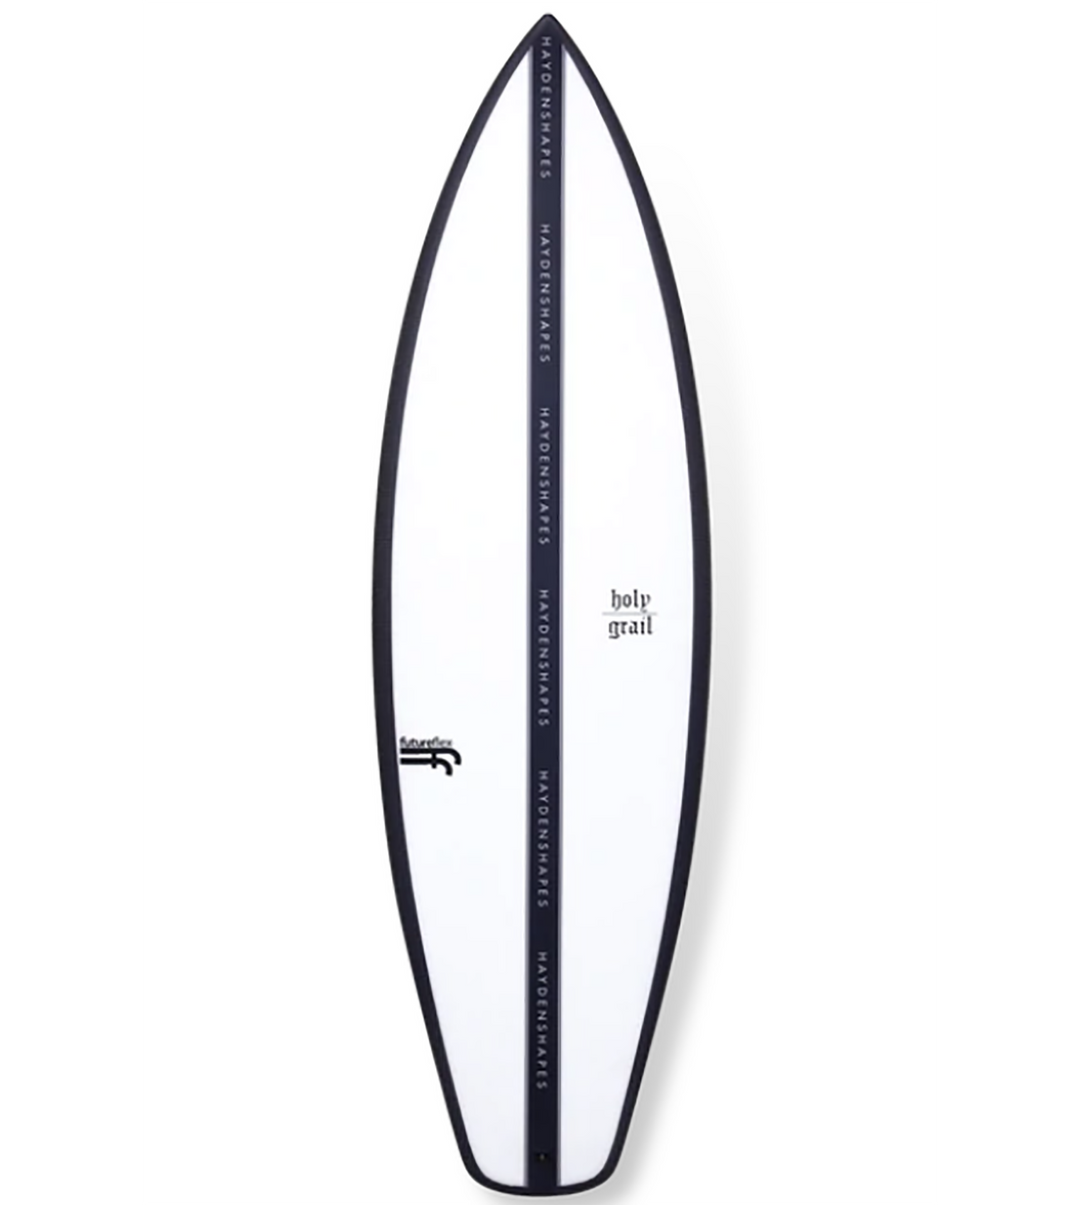 Surftech Surfboards